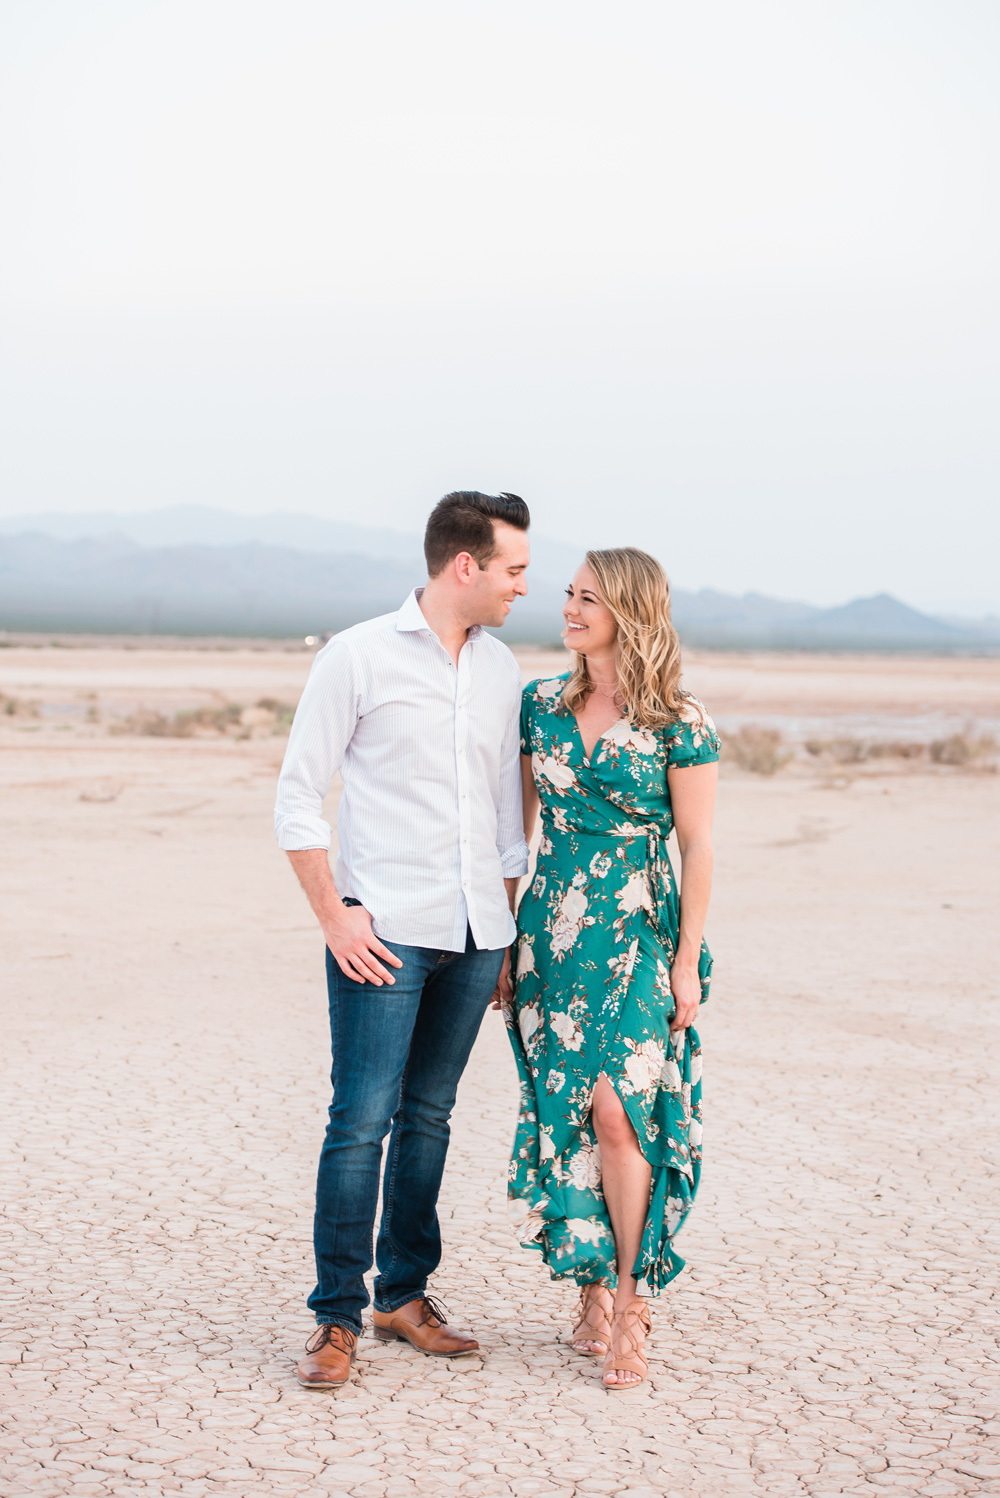 Dry Lake Bed Engagement Session | Kristen Marie Weddings + Portraits | Las Vegas Wedding Photographer